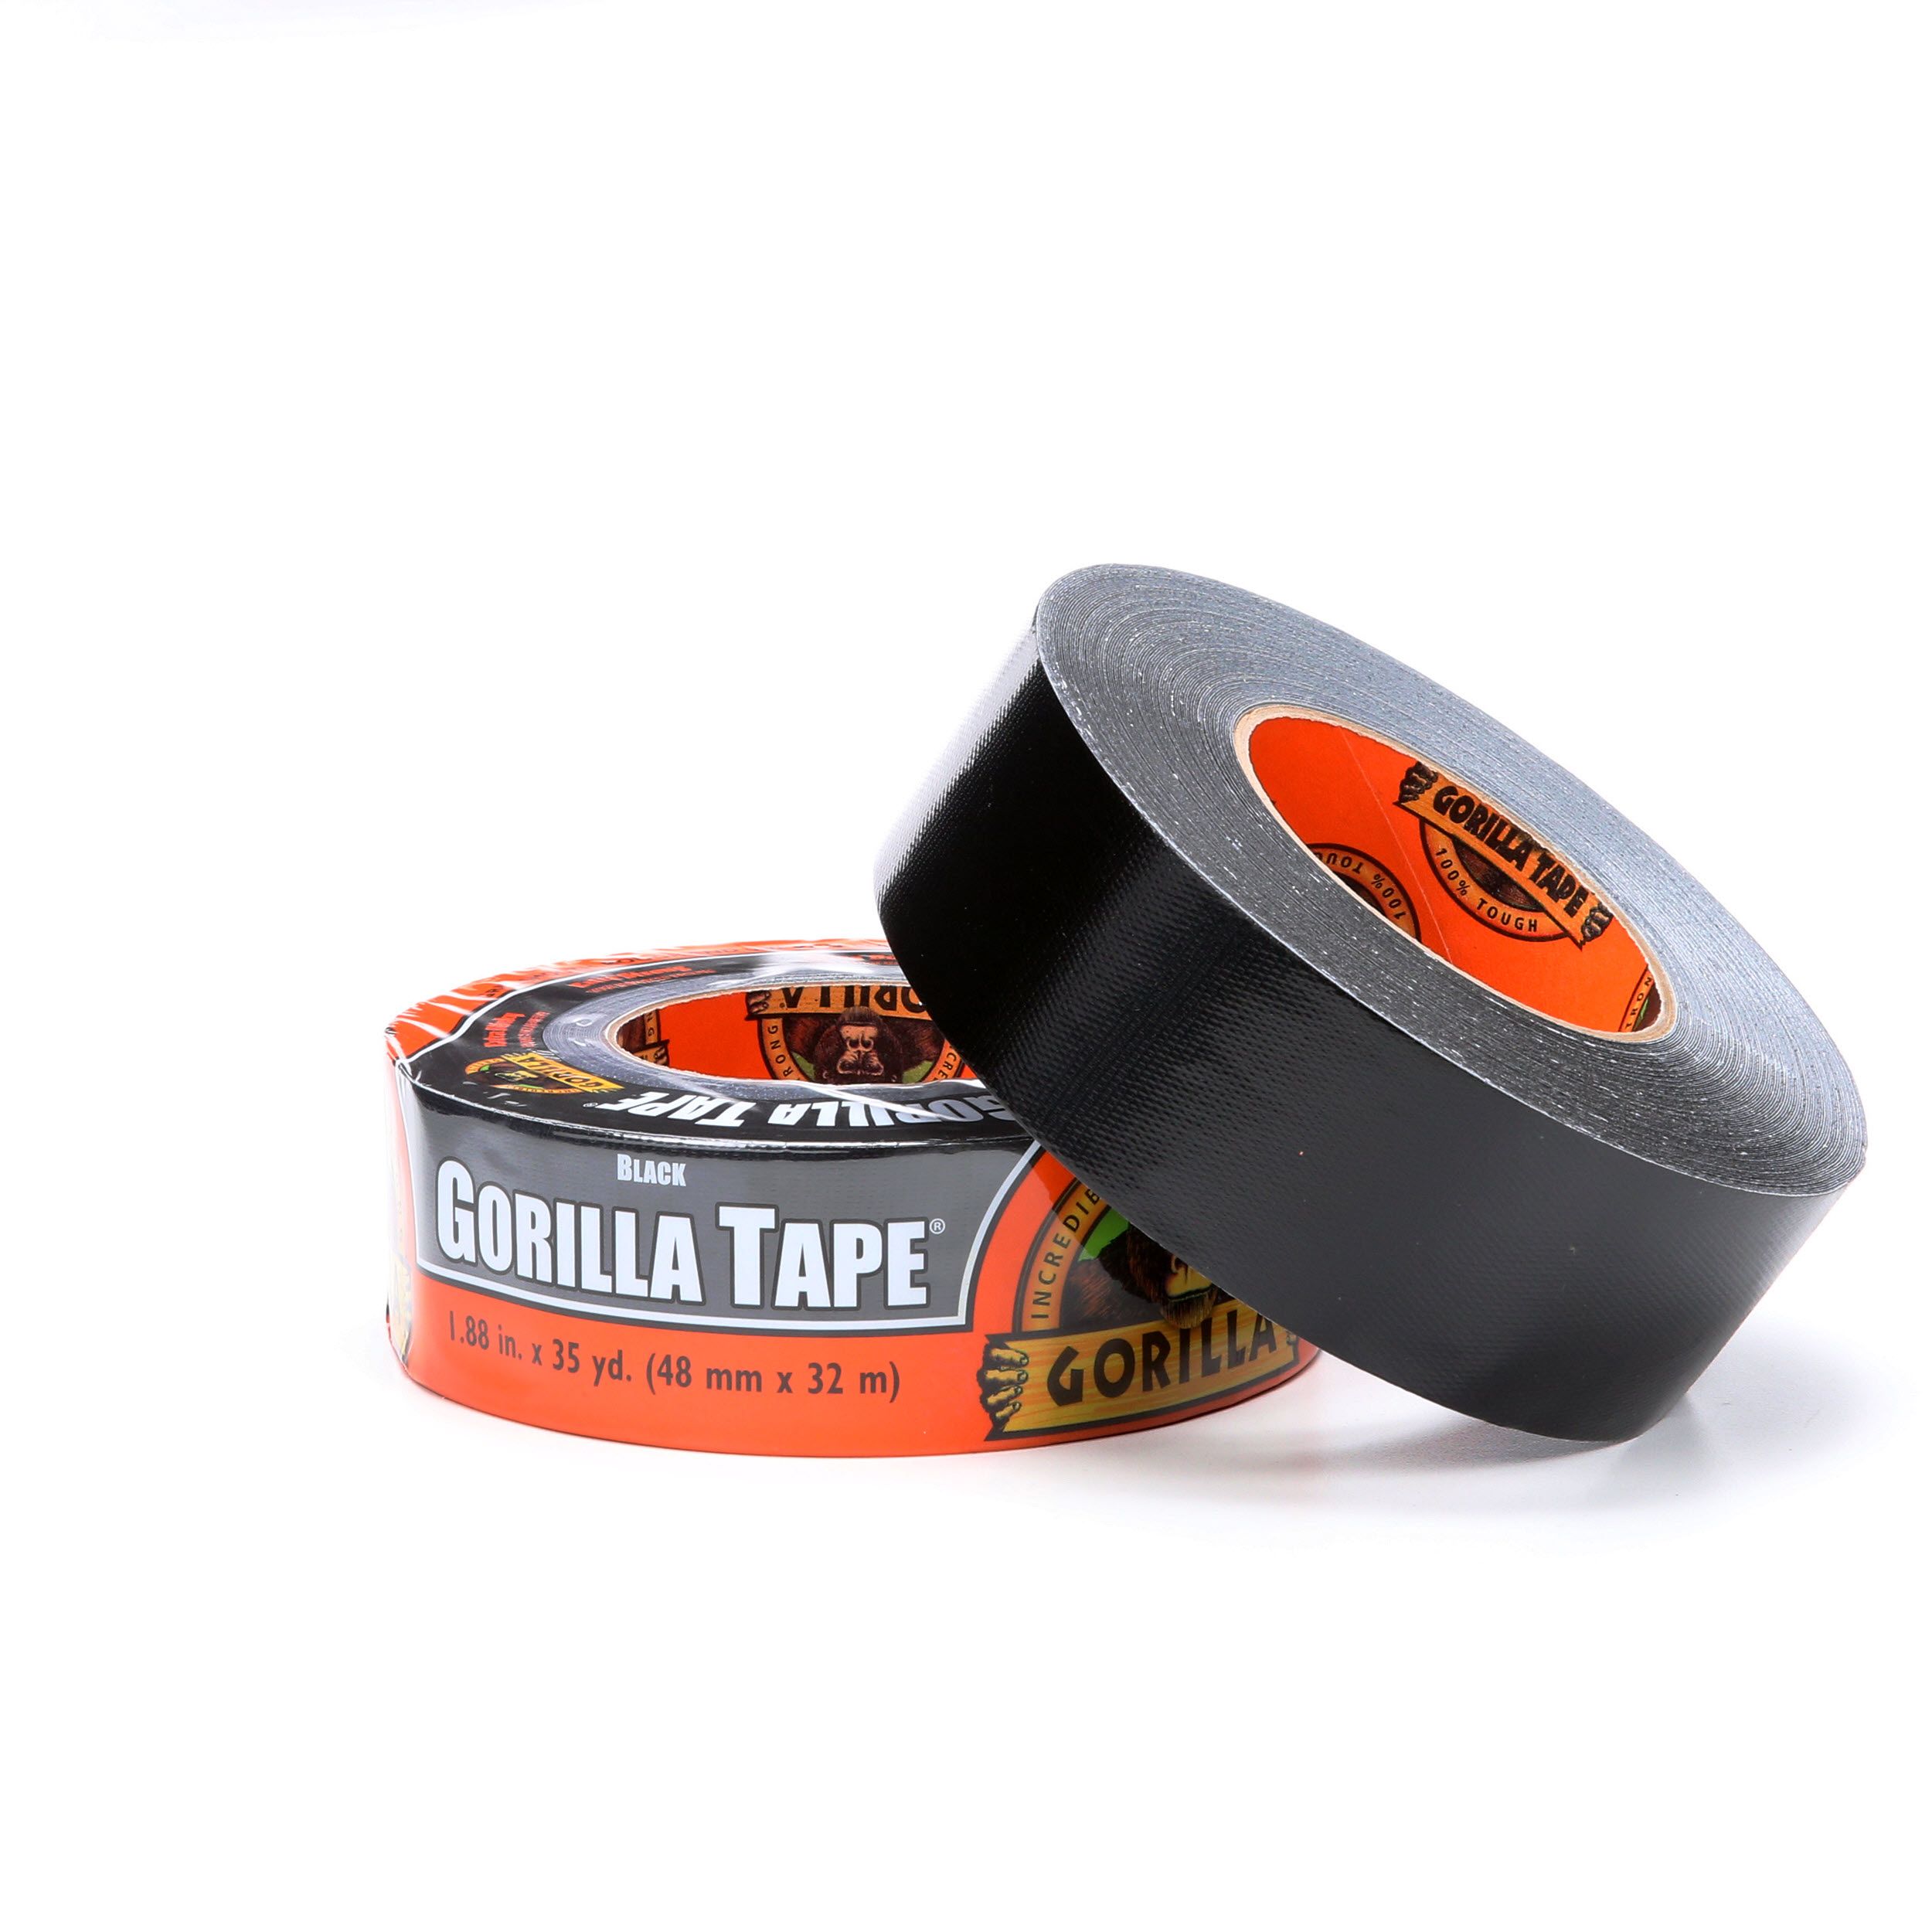 1.88" x 35 yd Black, Black Duct Tape Pack of 2 Gorilla Tape 